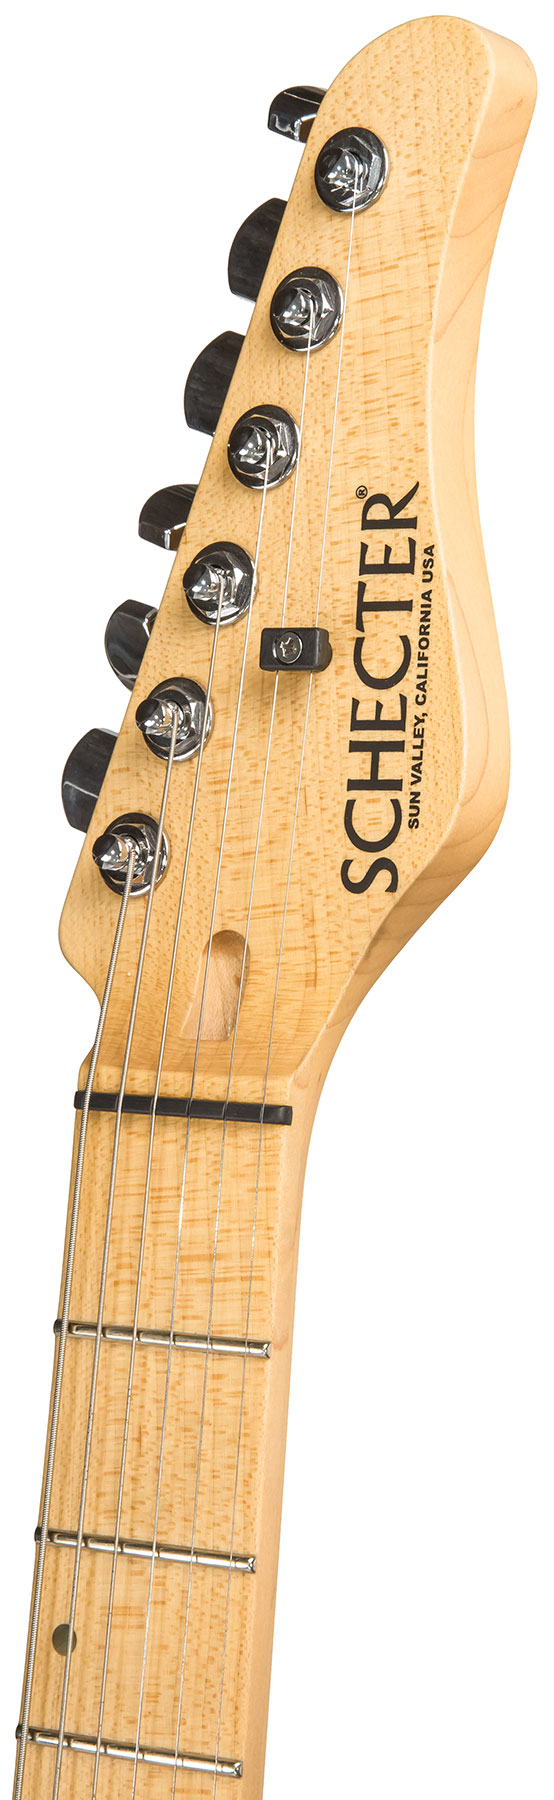 Schecter Custom Shop Sunset Usa Hss Trem Mn #1409001 - Trans Sky Blue - Guitare Électrique Forme Str - Variation 2